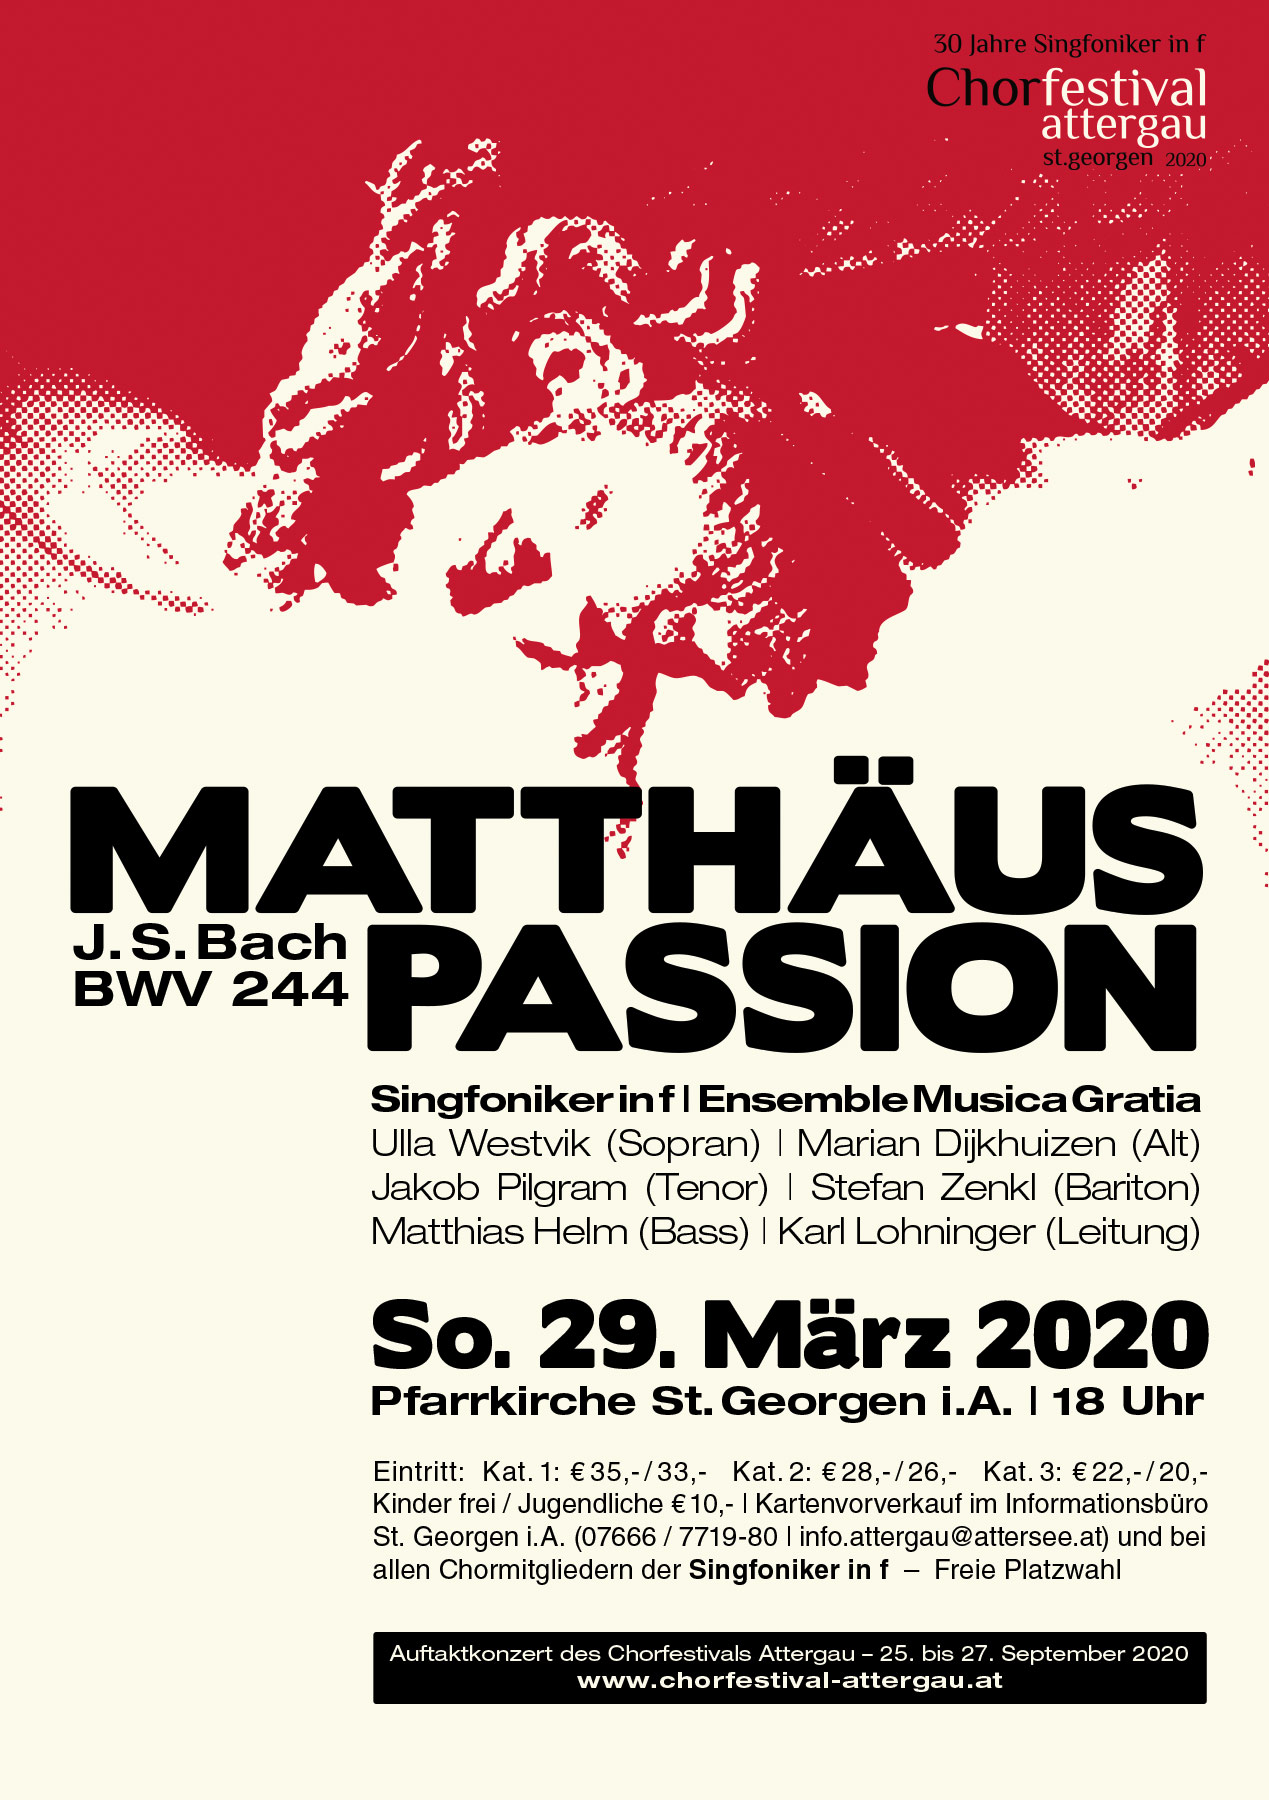 Matthäus Passion Veranstaltungsplakat